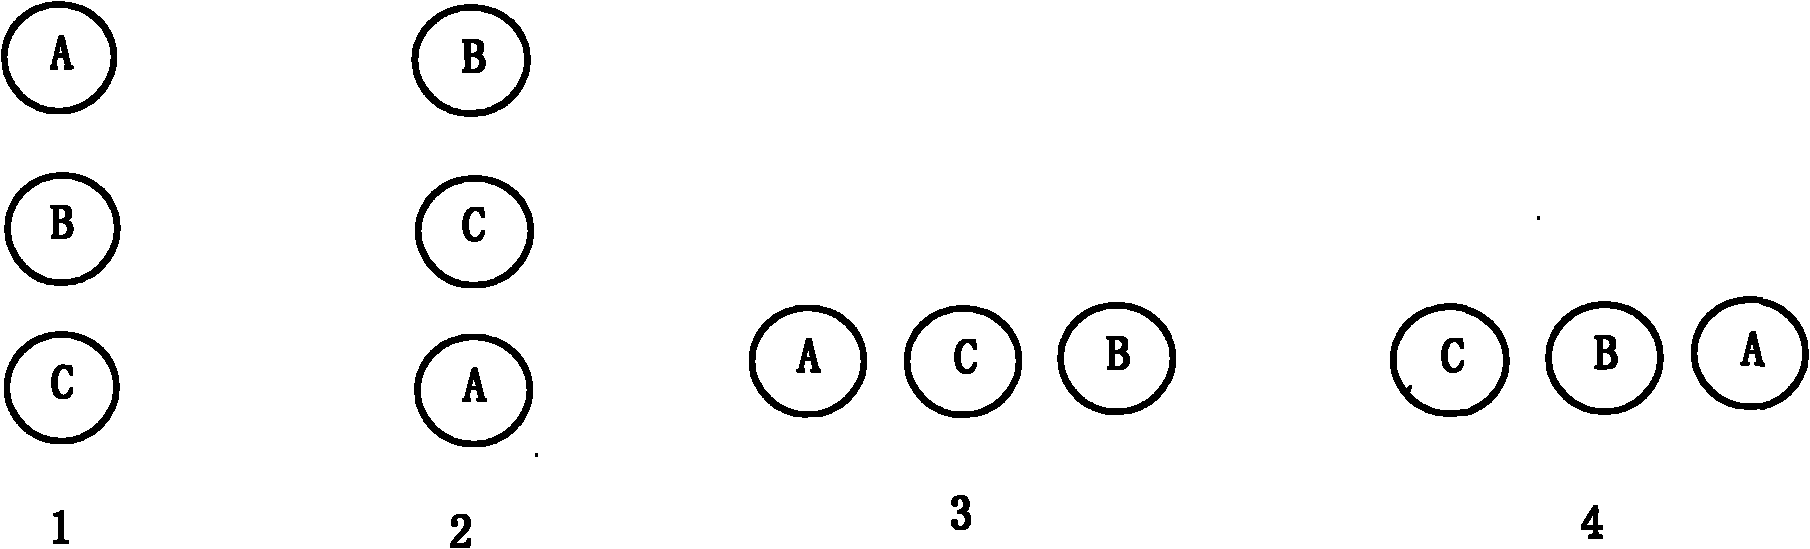 Three-key combination control method